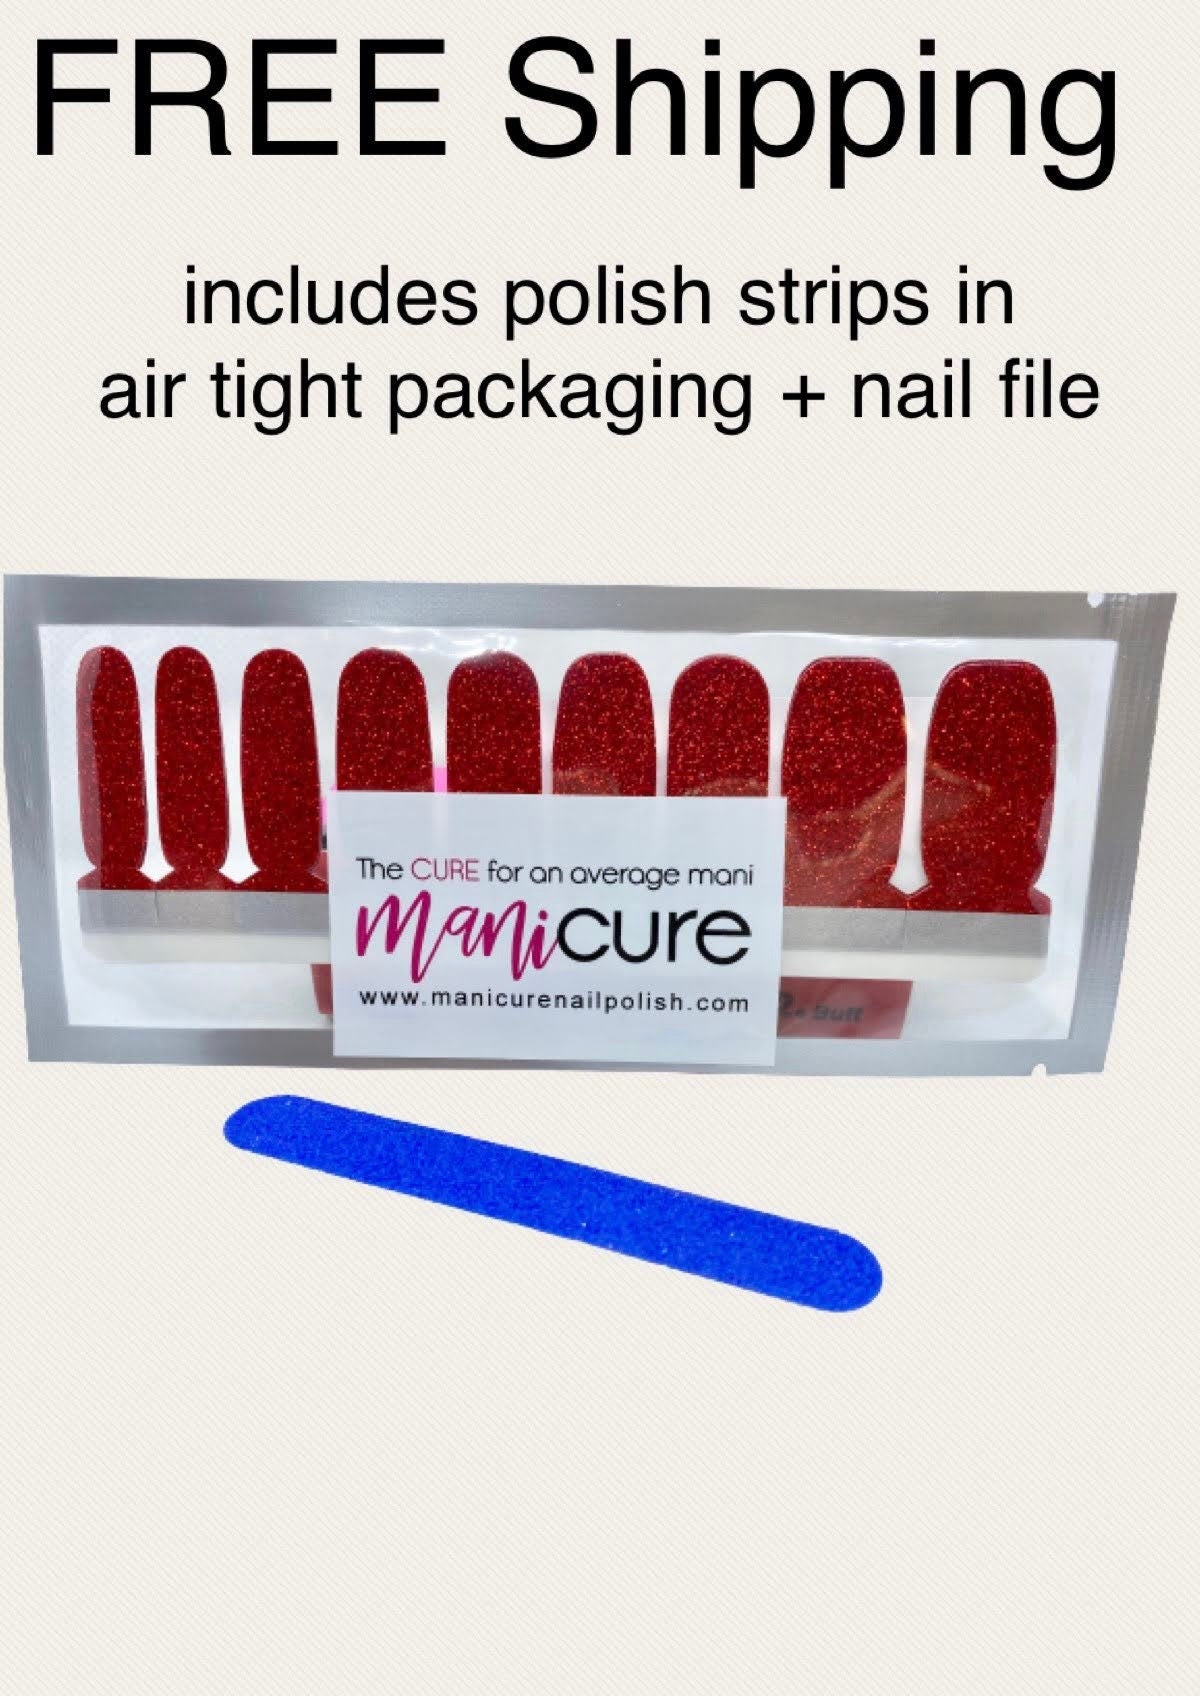 Tropical Blue Marble Finish, ManiCURE  Real Nail Polish Strips, Dry Nail Polish, Nail Wraps, Stickers, Long Lasting, Non Toxic - manicurenailpolish